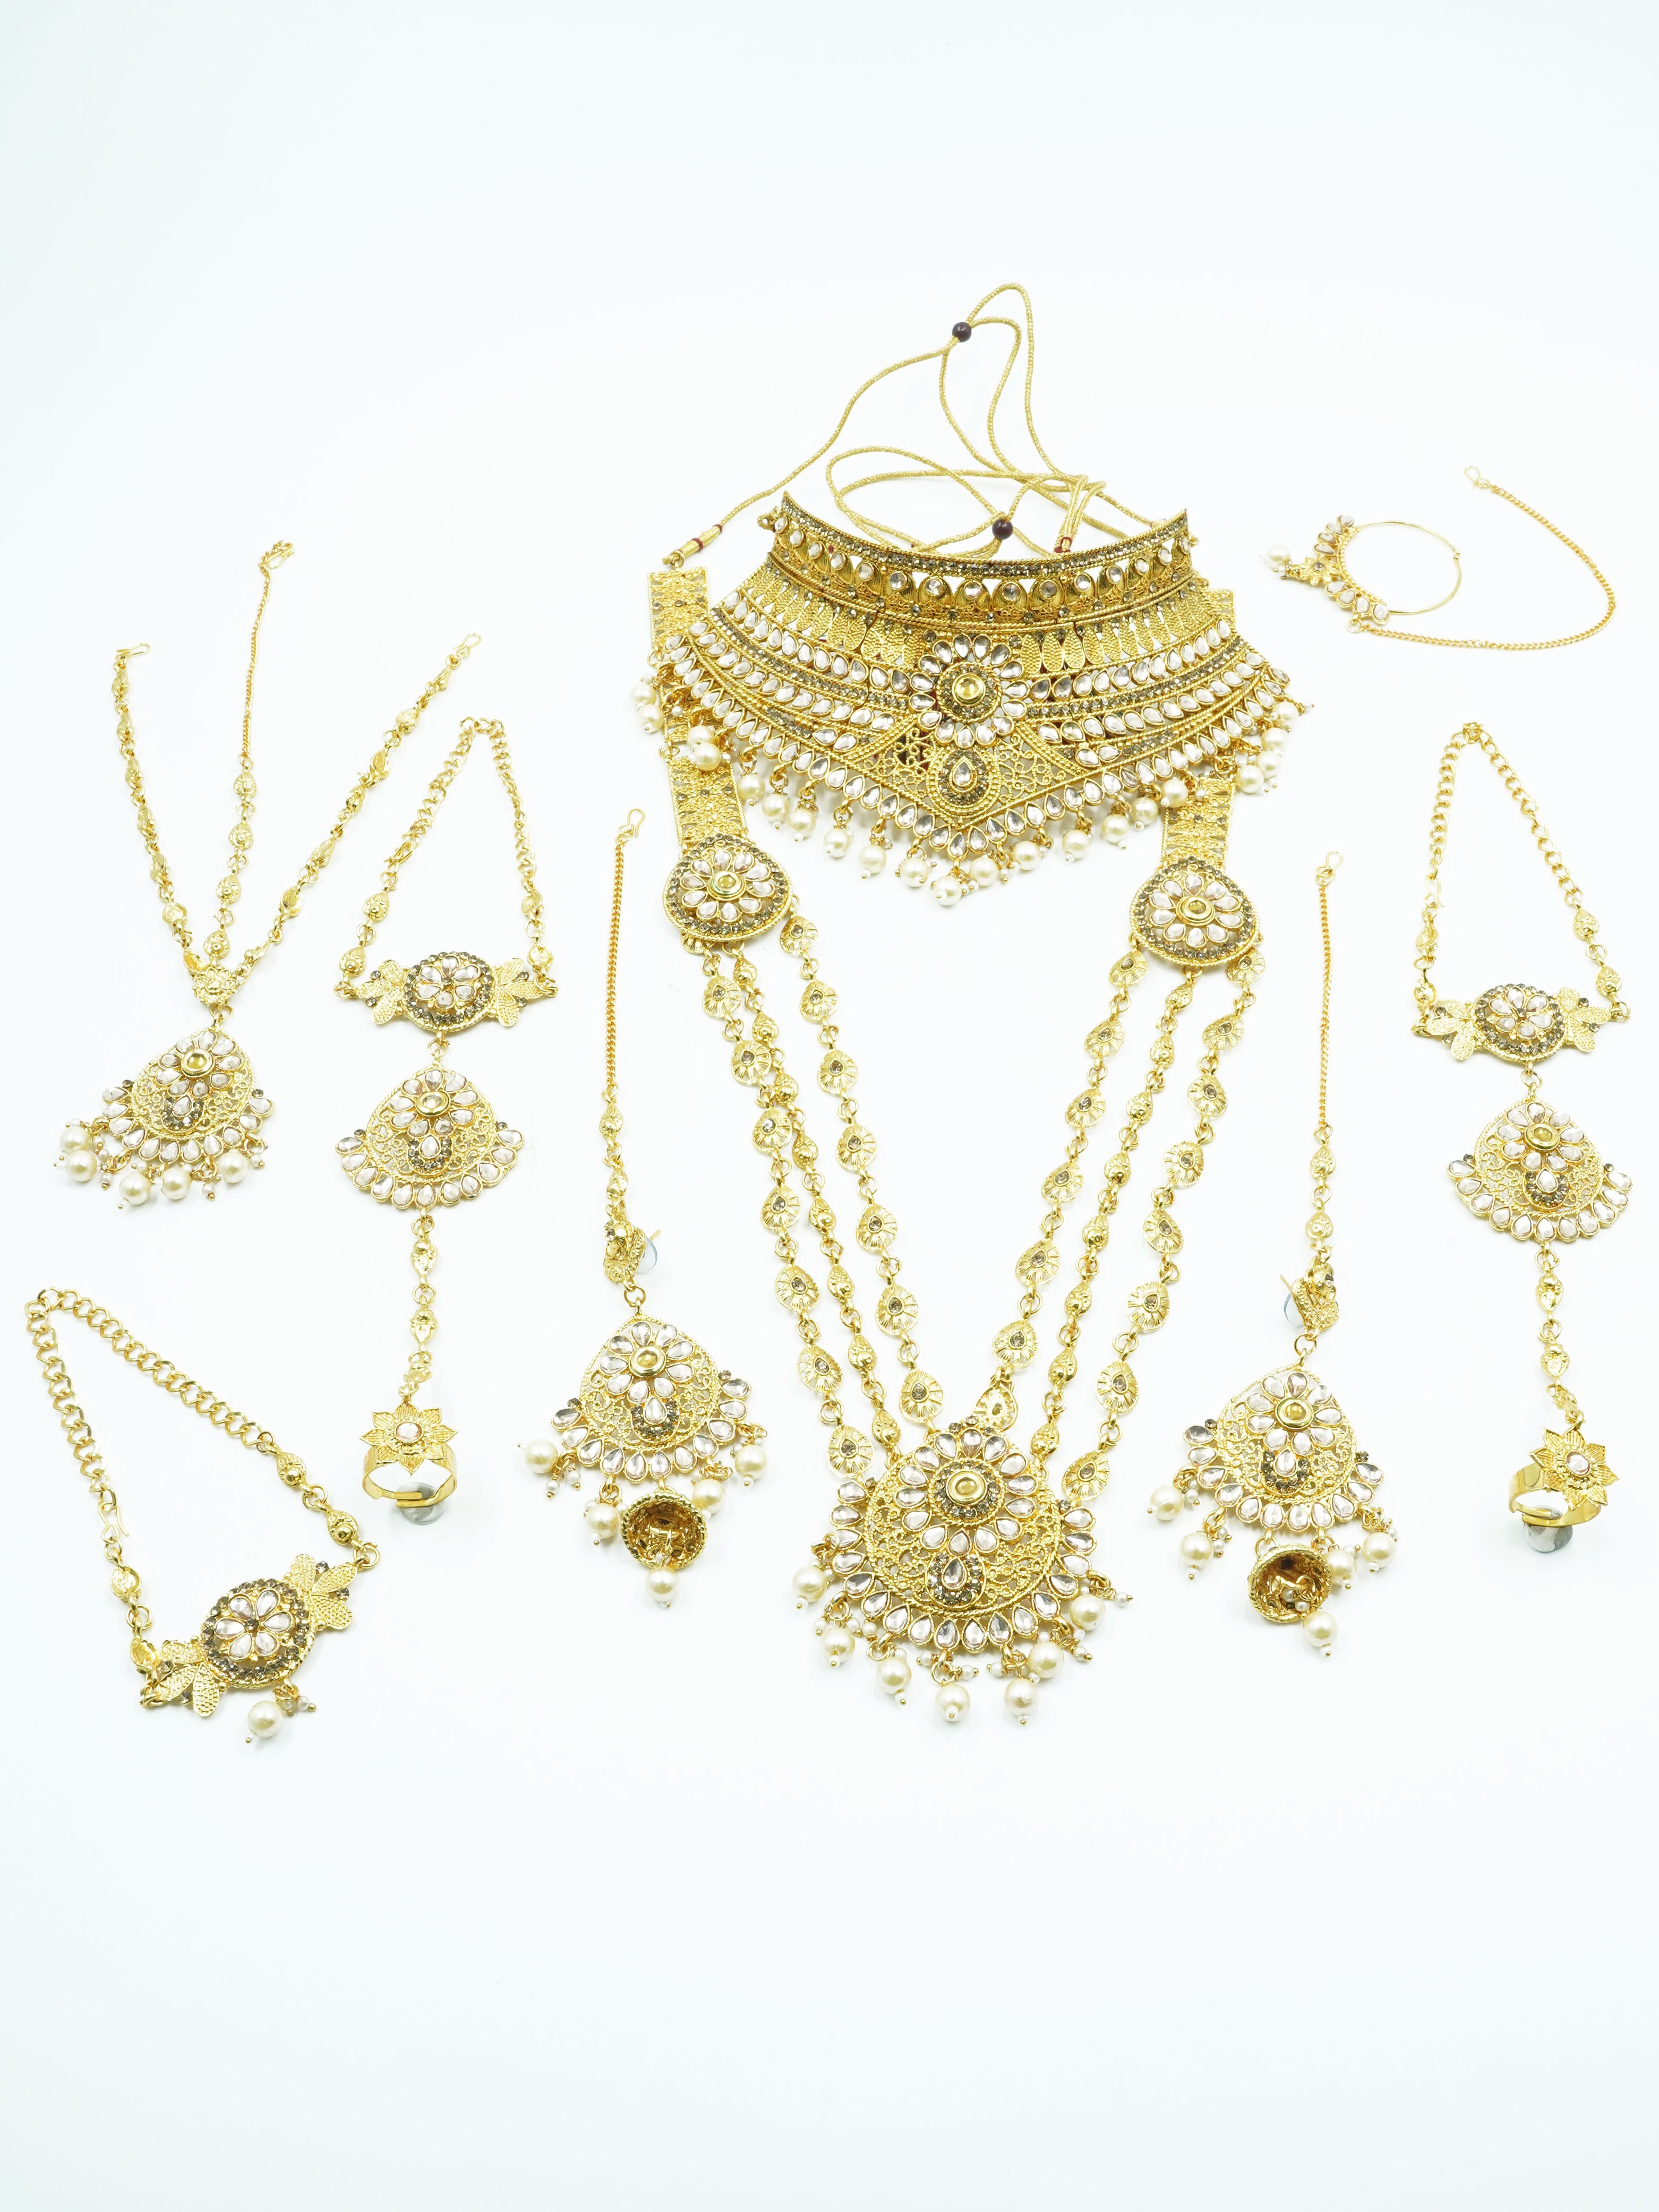 Fancy Dulhan set Gold Polish Bridal jewelry Set combo 11192N